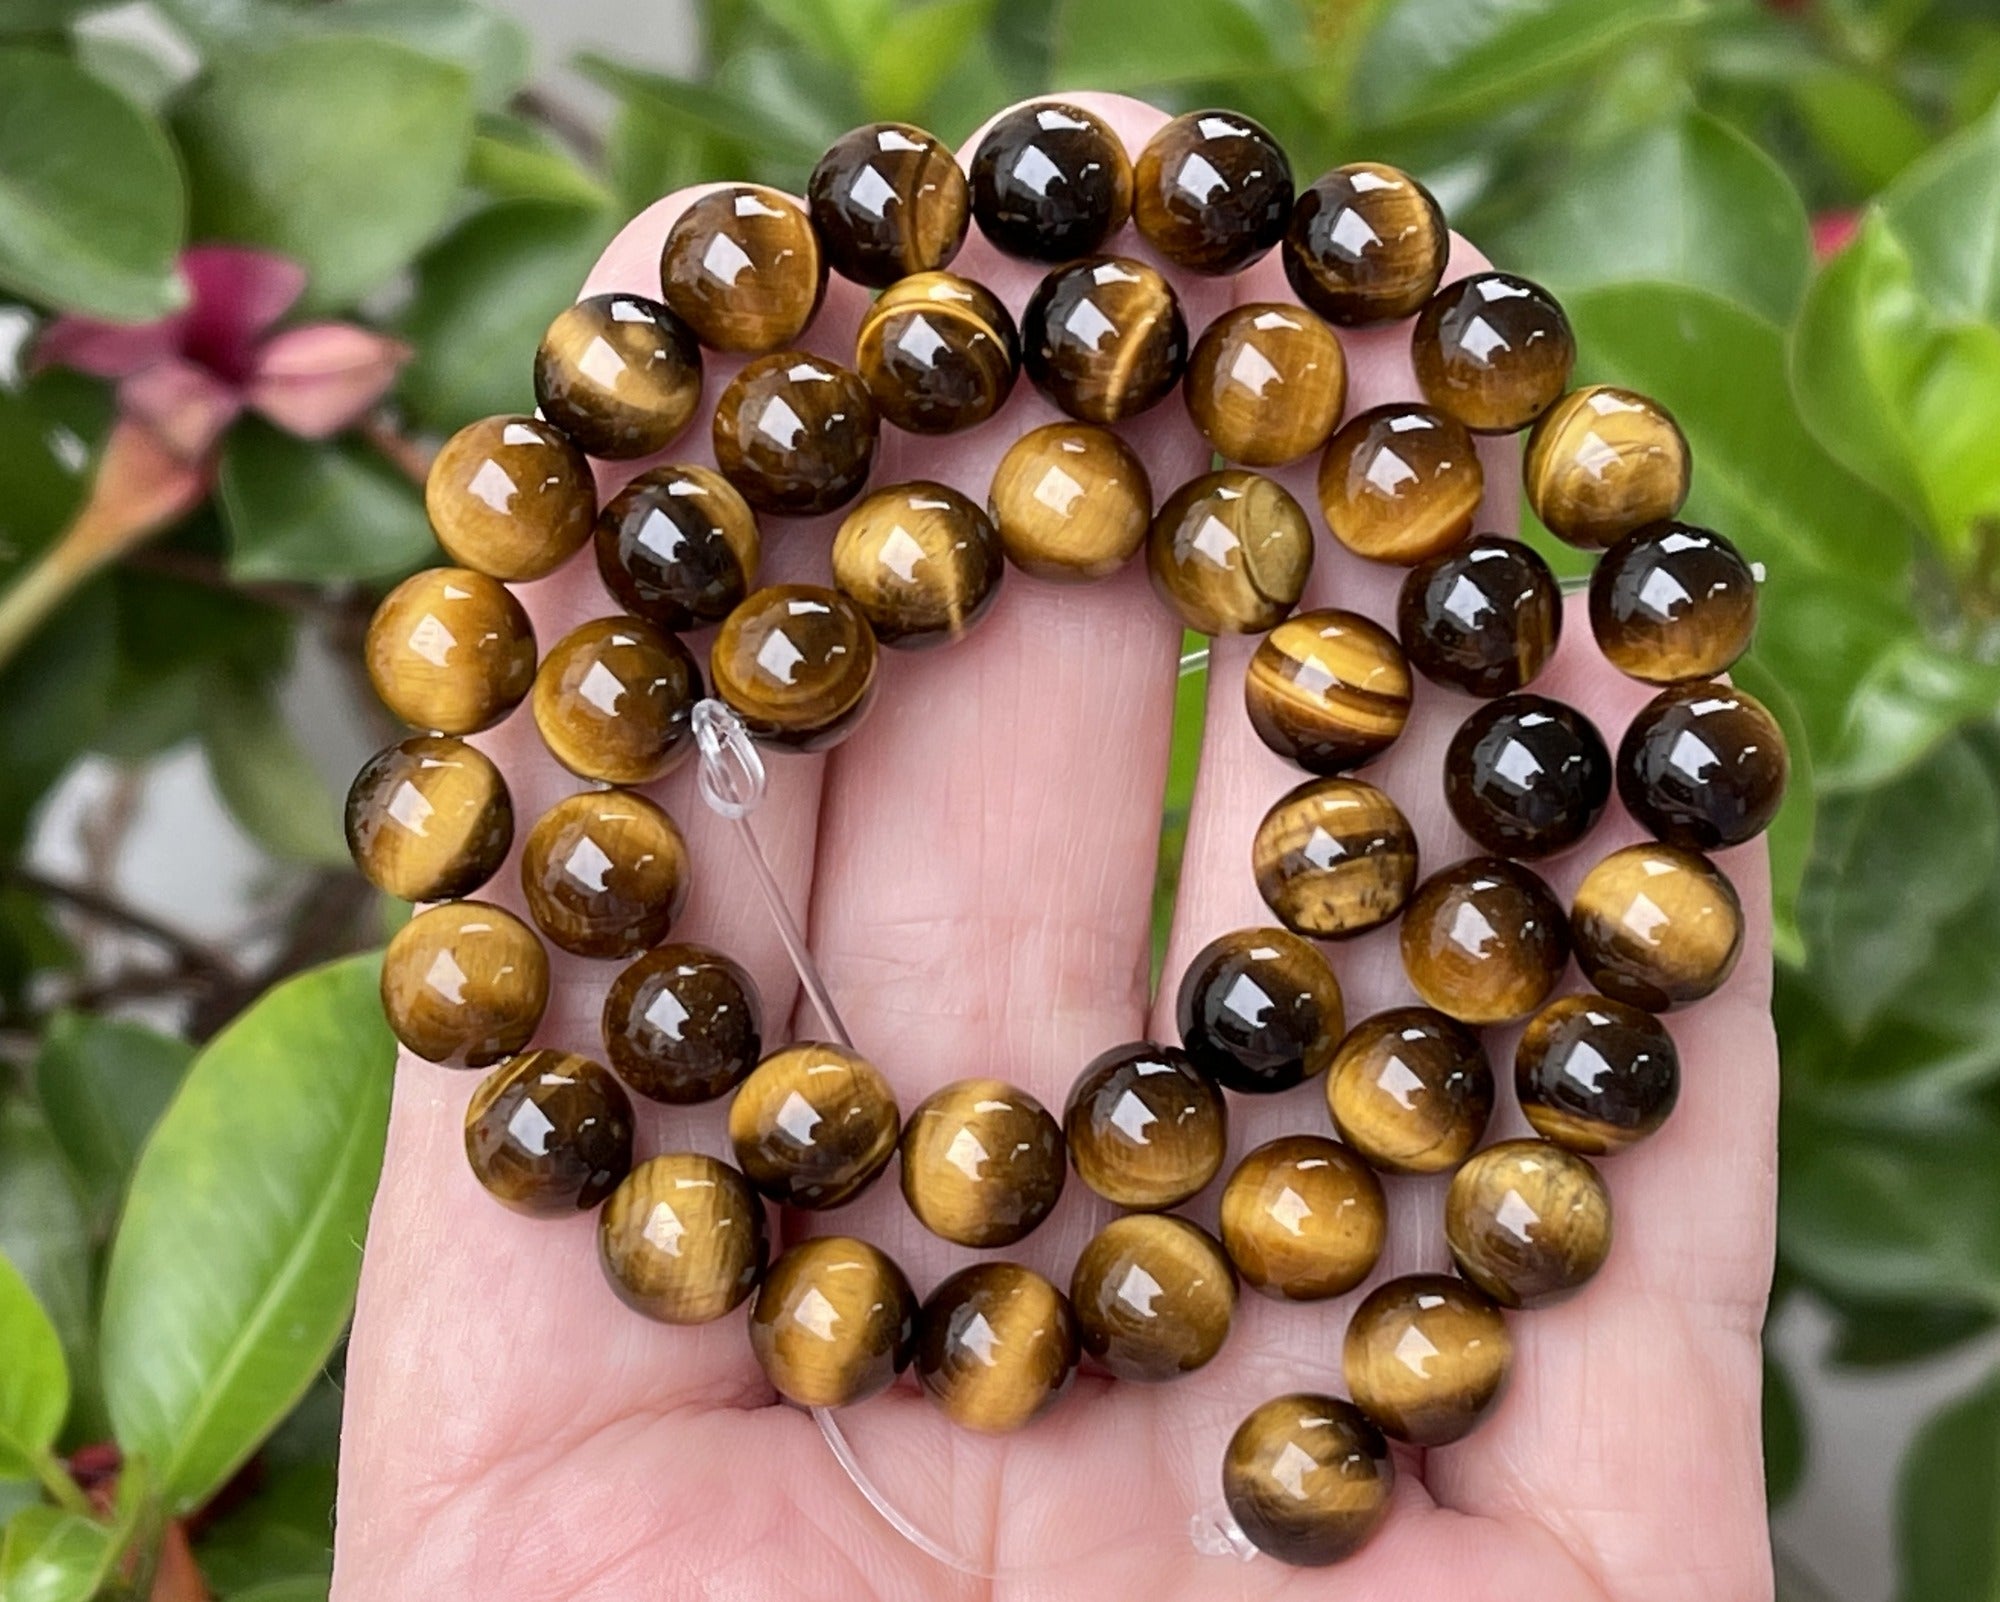 Yellow Tiger Eye 8mm round polished gemstone beads 15.5" strand - Oz Beads 